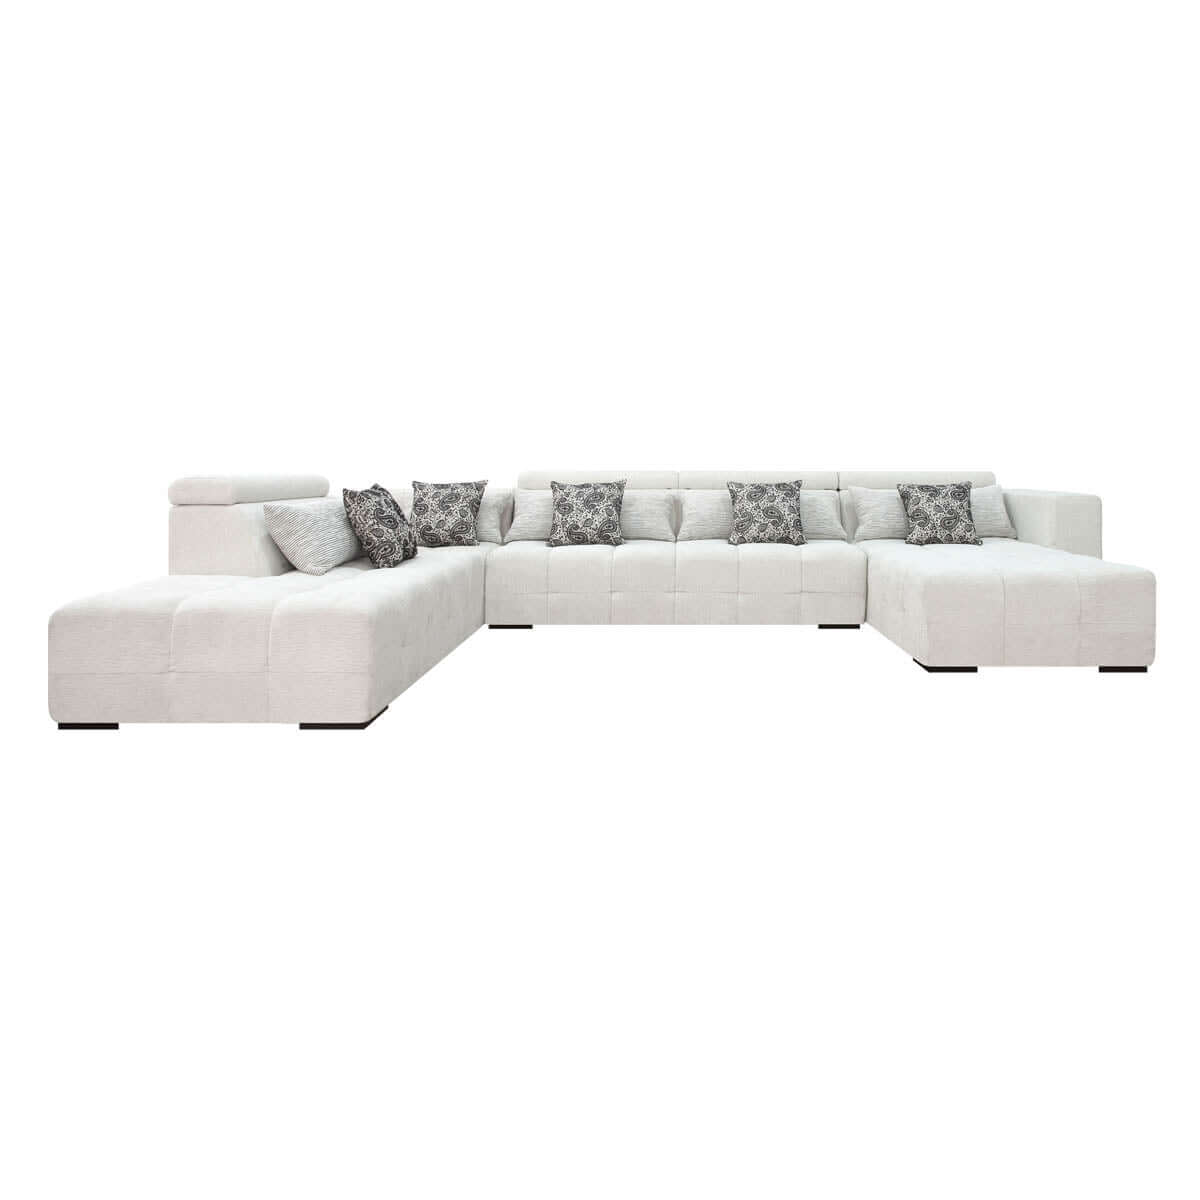 sofa u shape with movable headrest furniture di indonesia